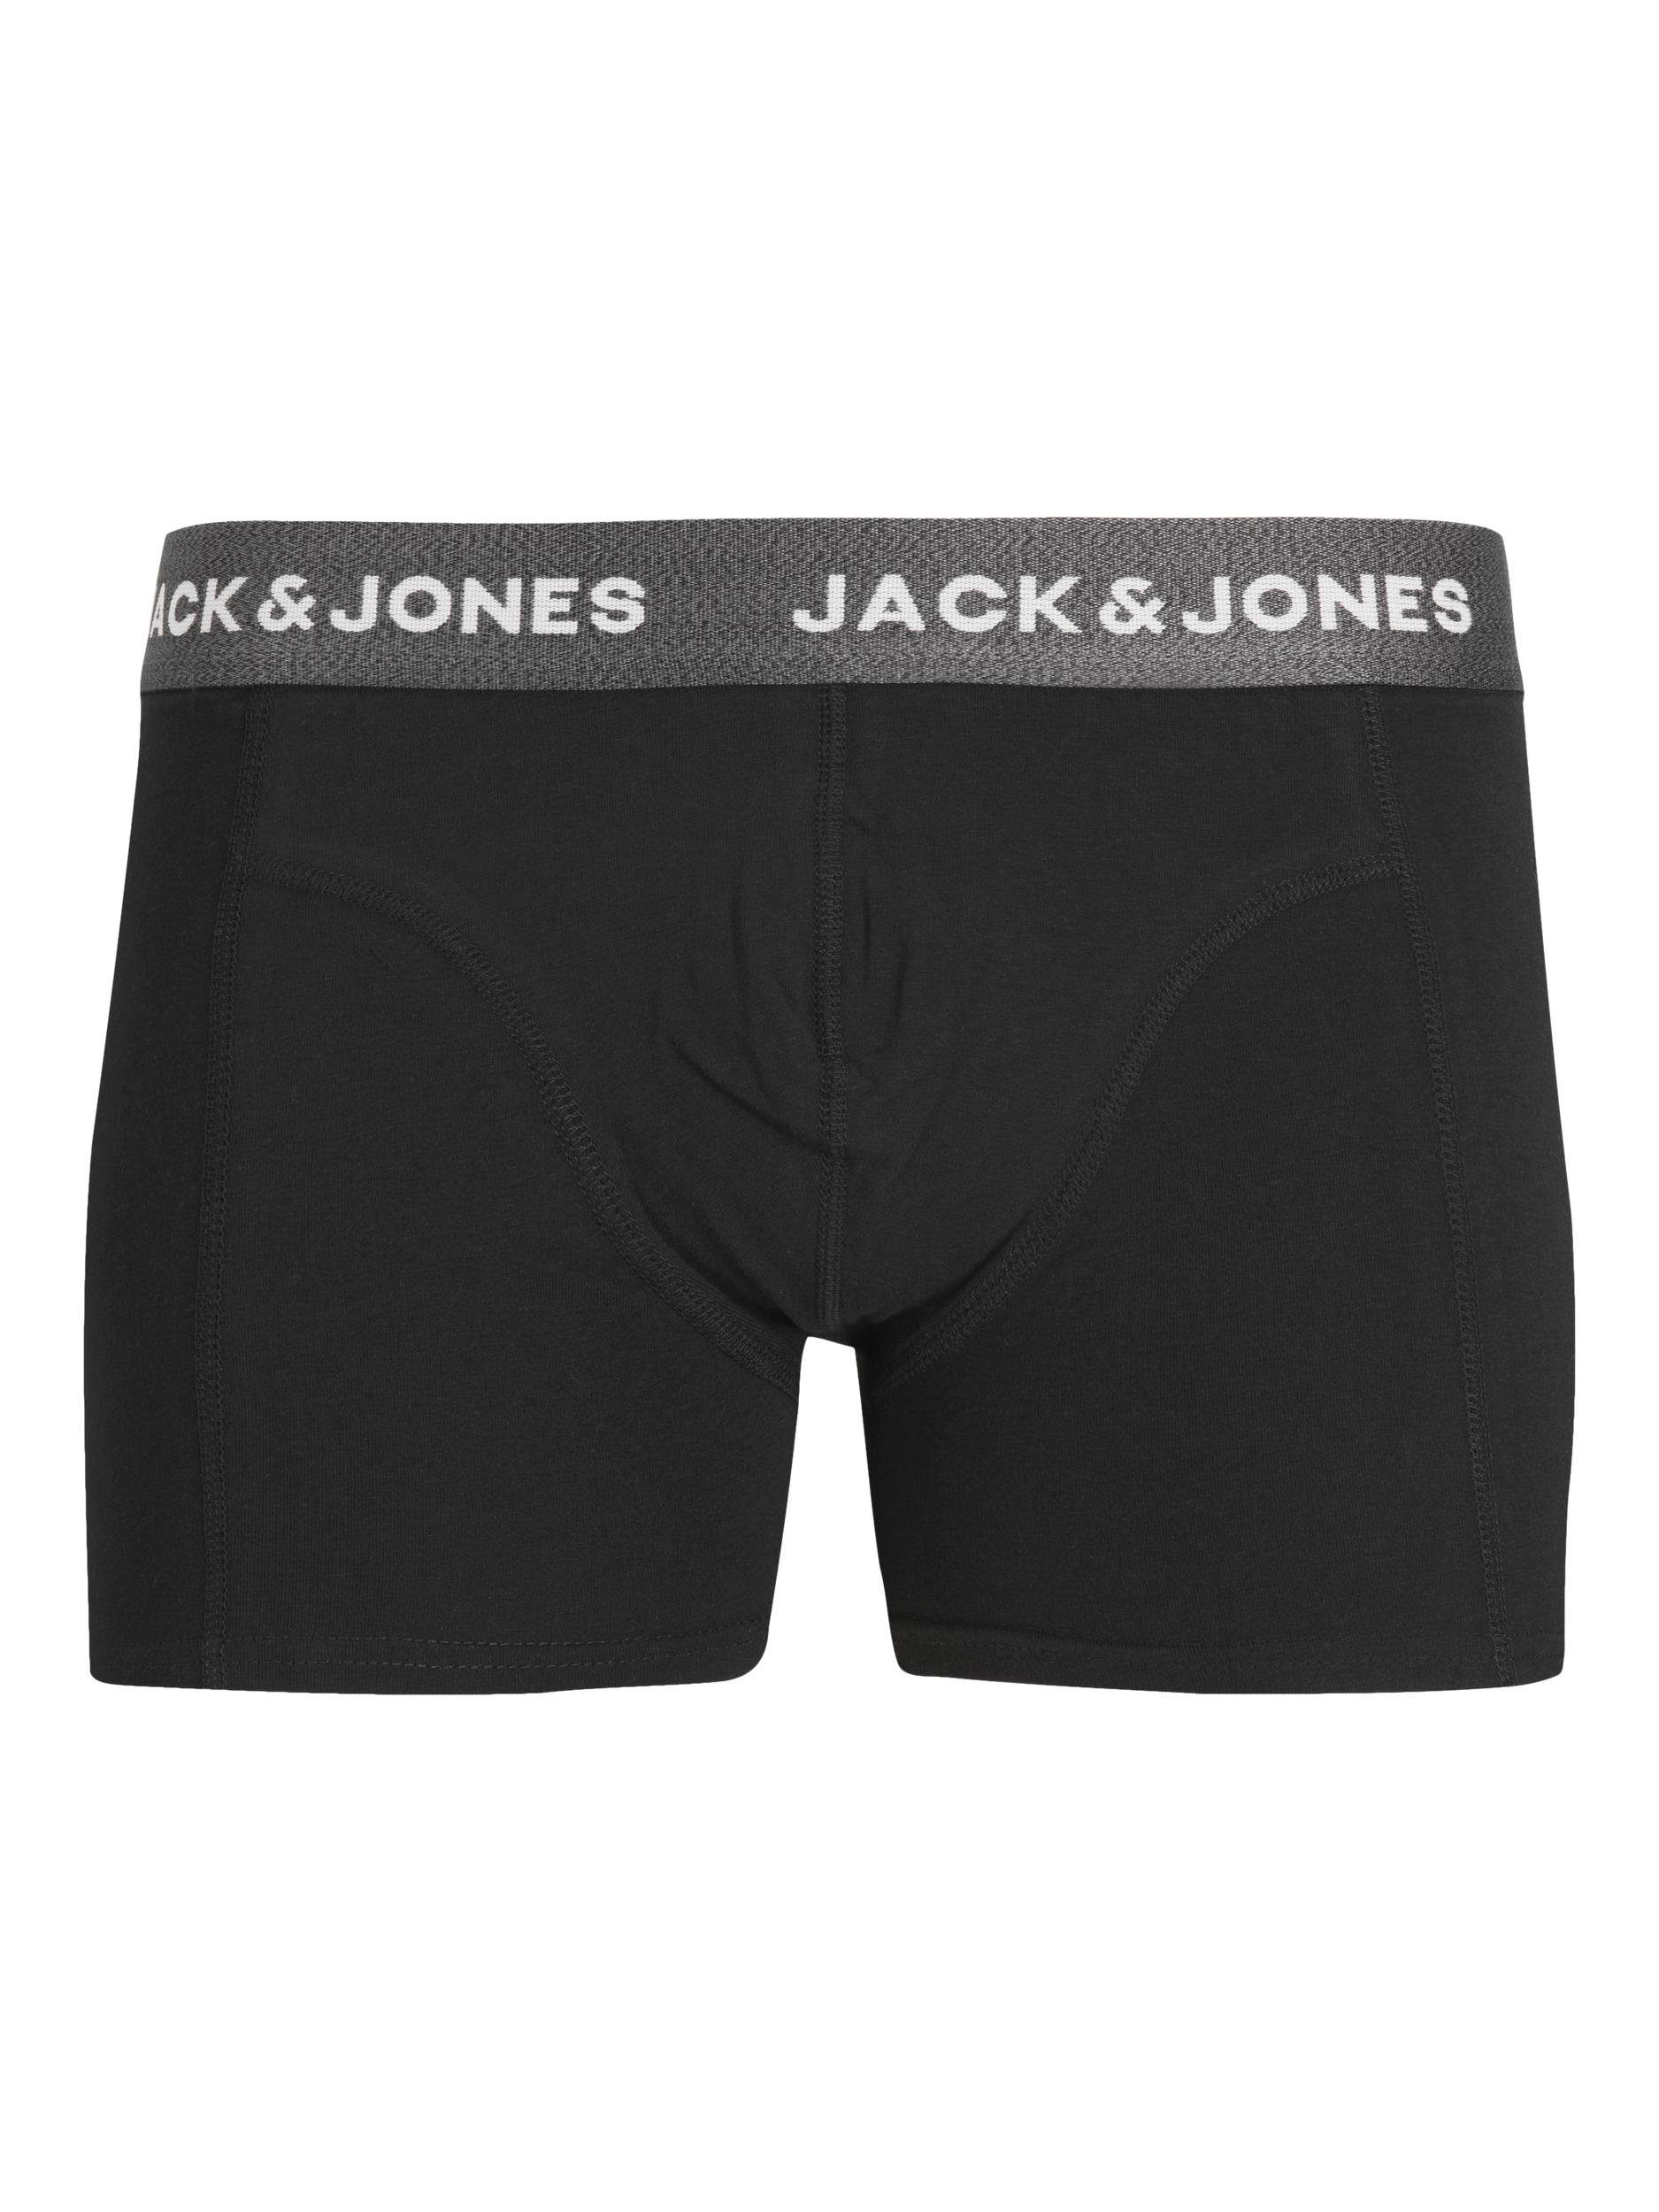 3er TRUNKS Shorts Jones Boxershorts Pack Boxershorts & Jack JACBILL